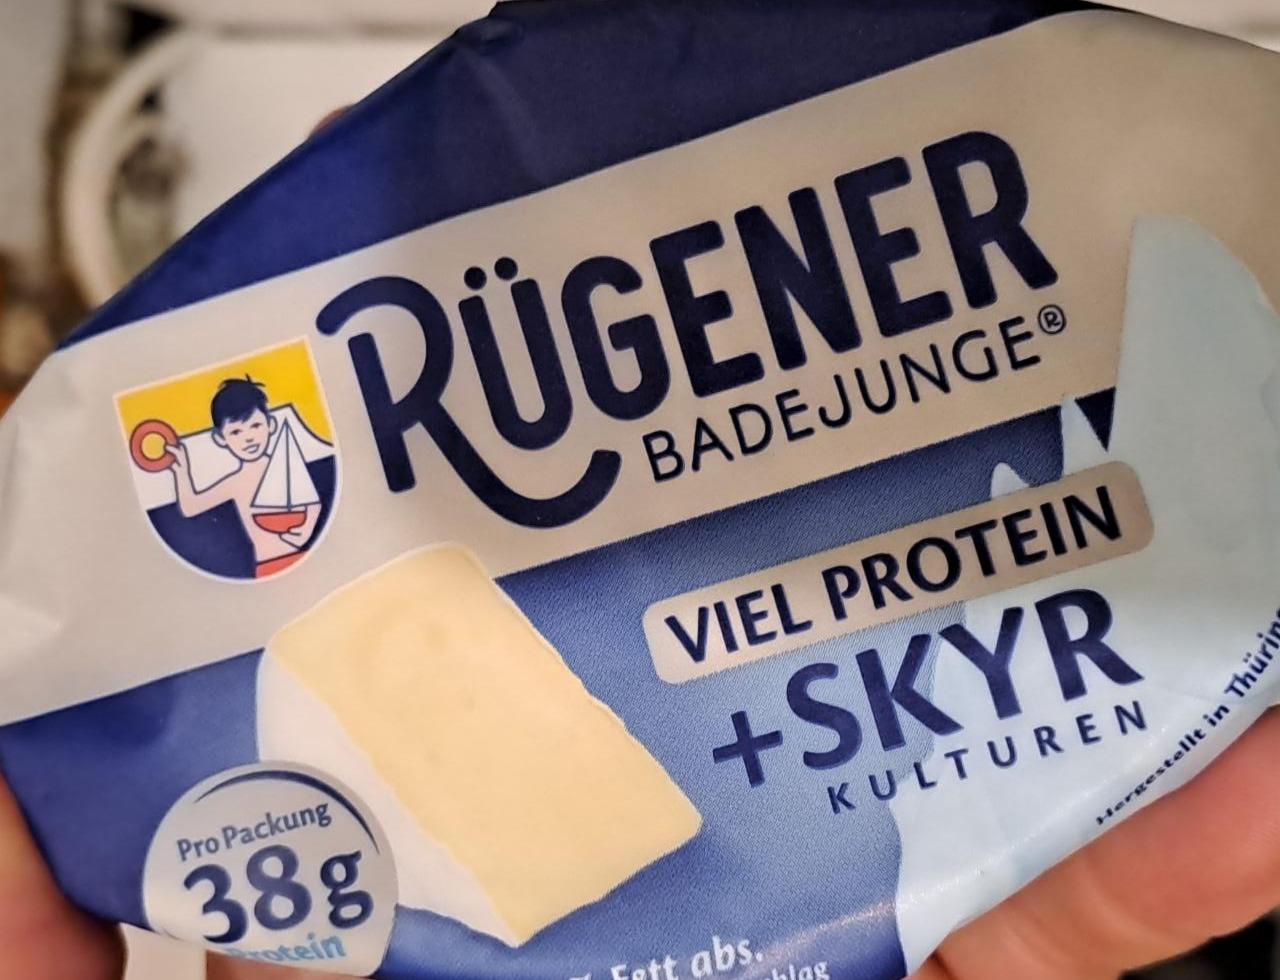 Fotografie - Viel protein + skyr kulturen Rügener Badejunge